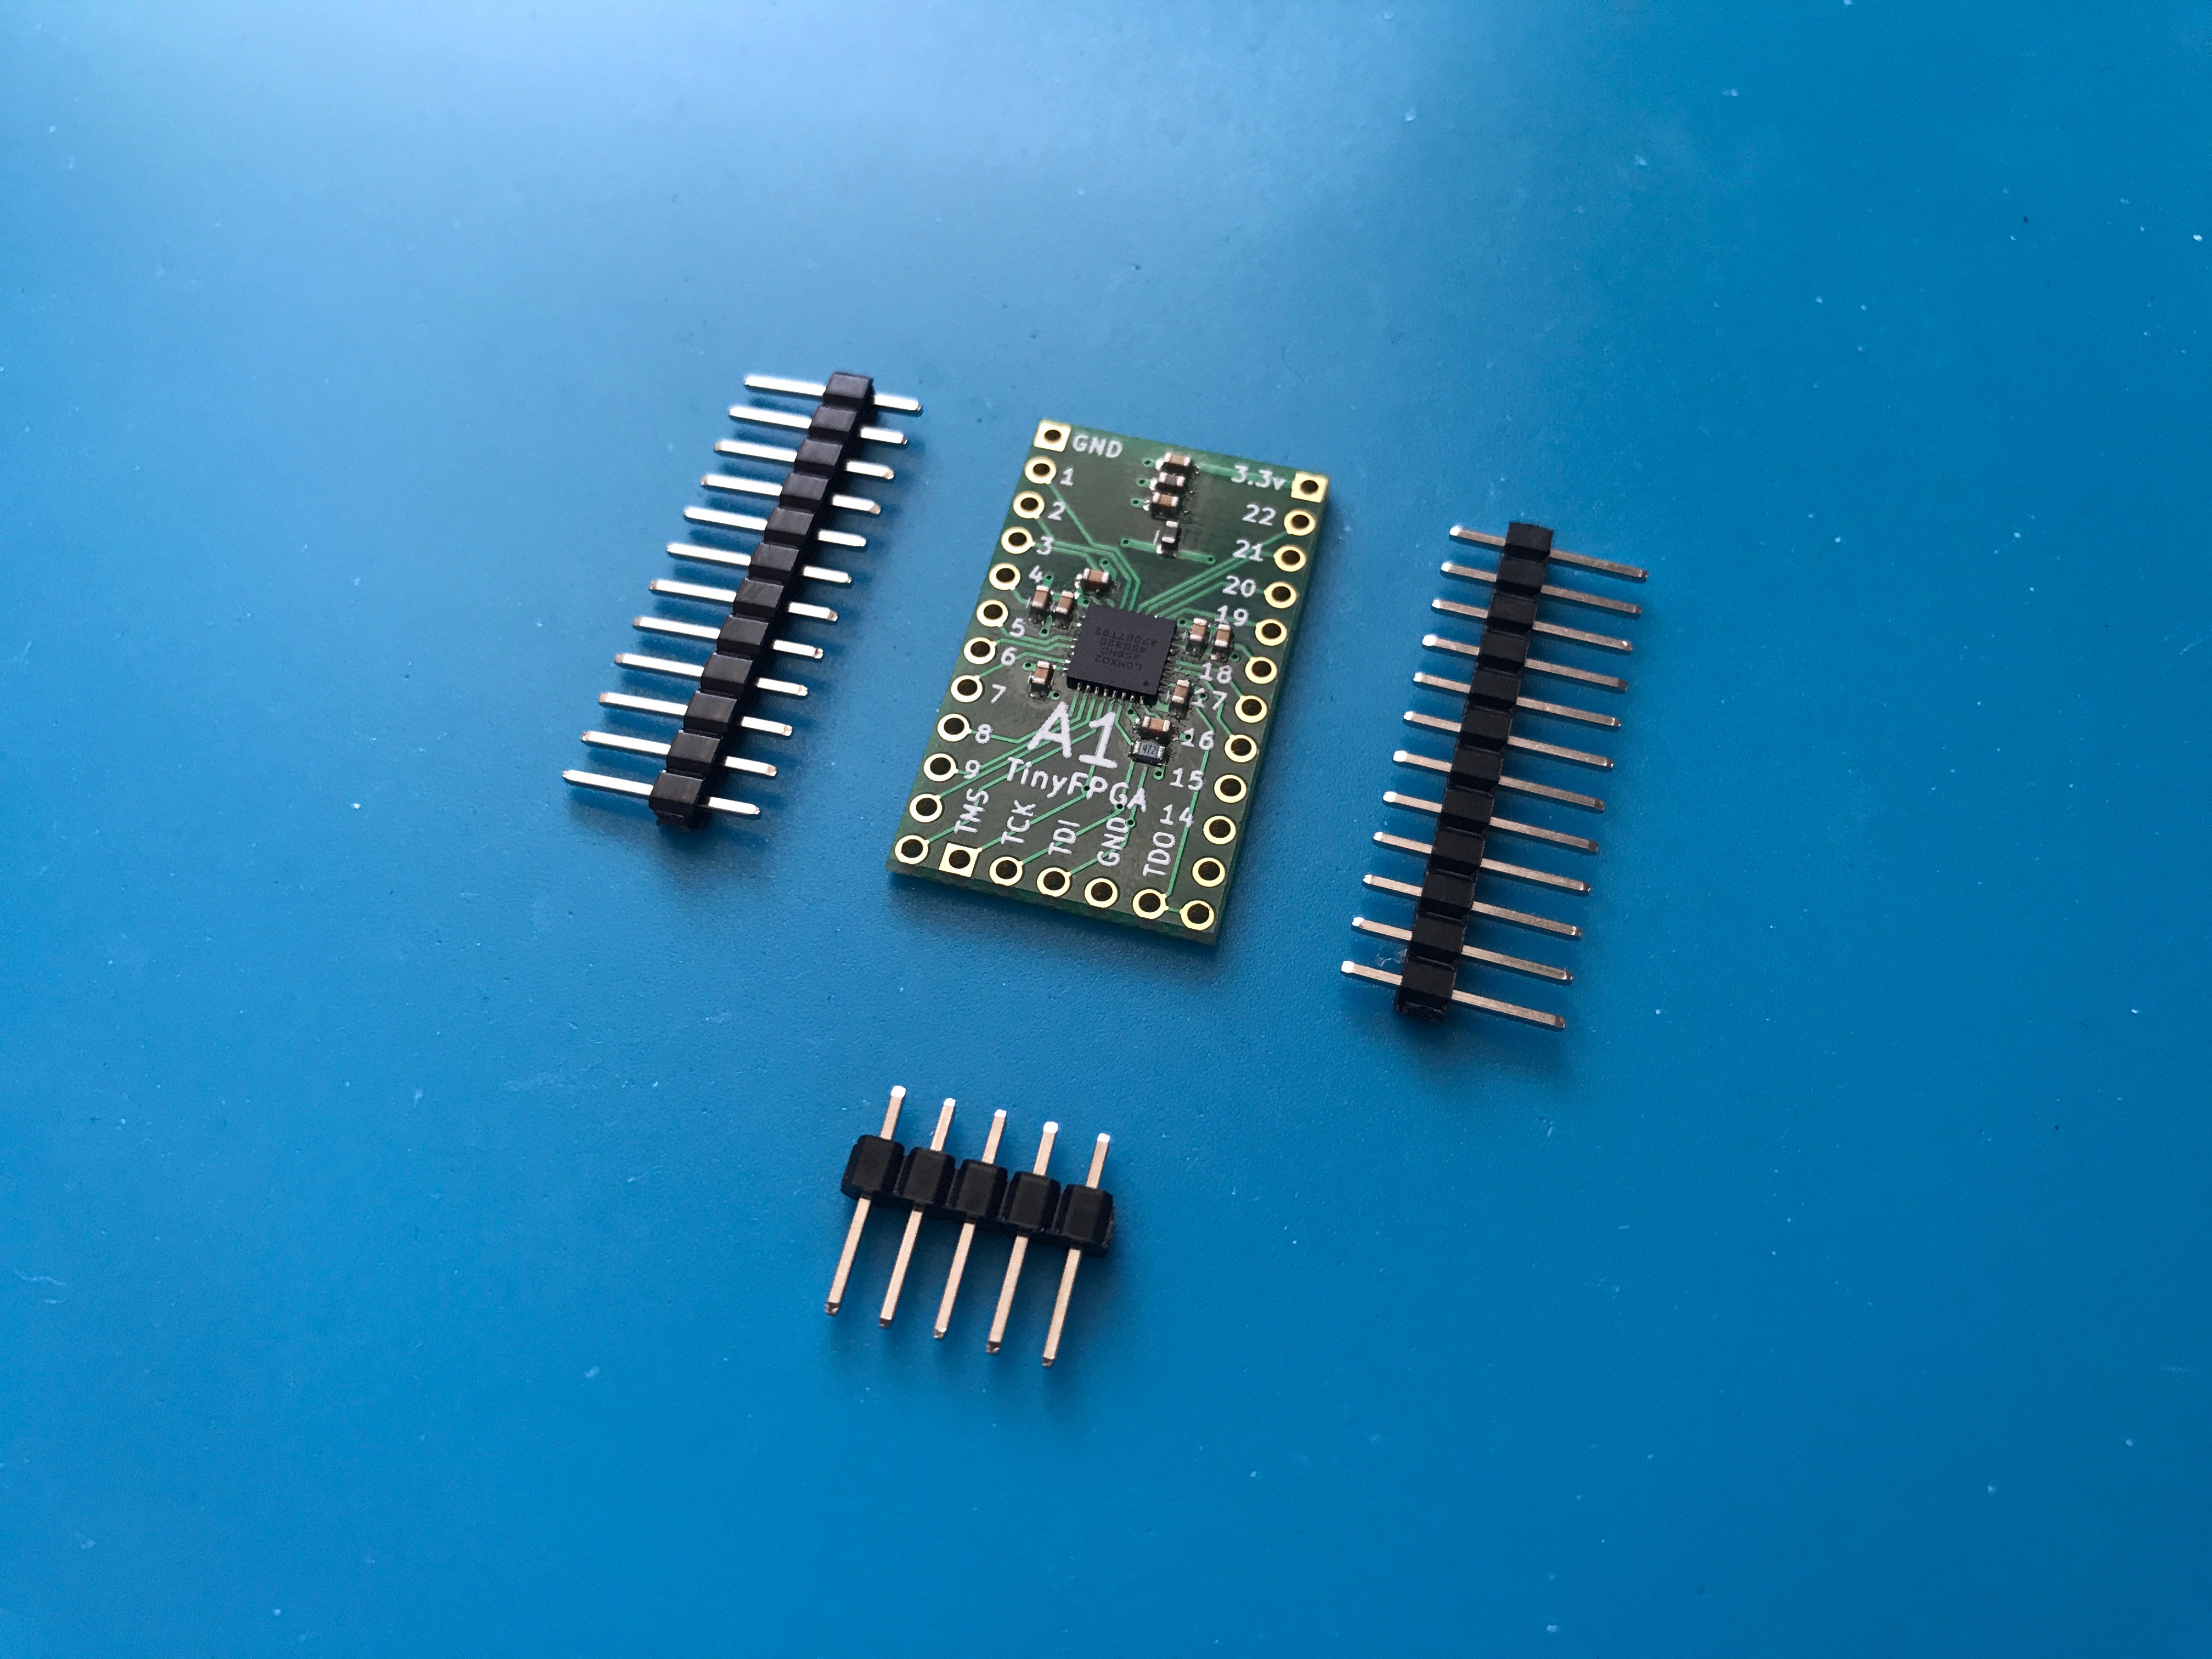 TinyFPGA A1 next to pins